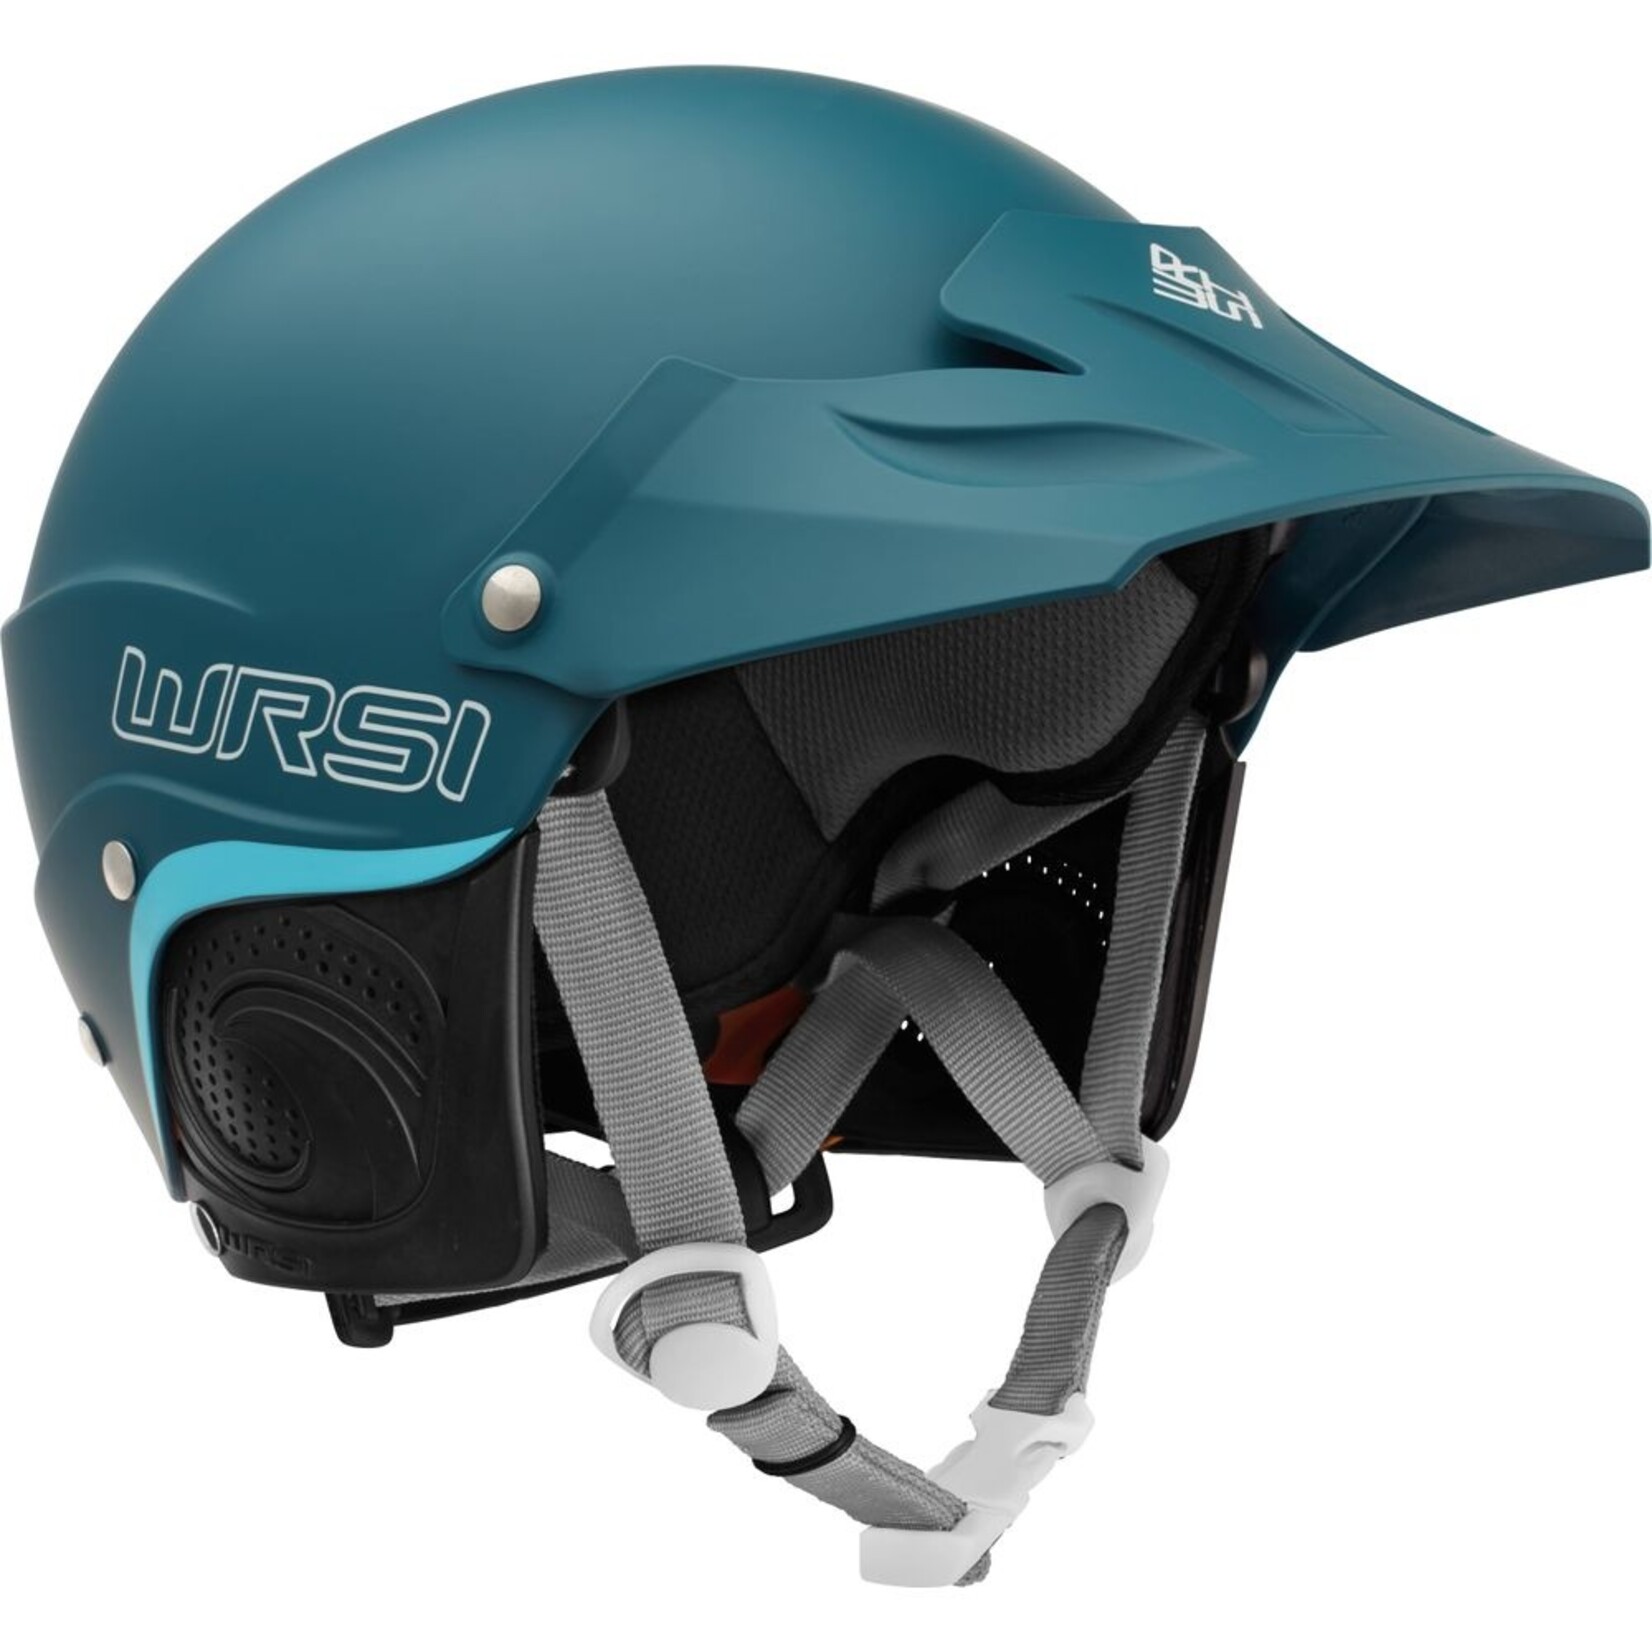 WRSI WRSI Current Pro Helmet